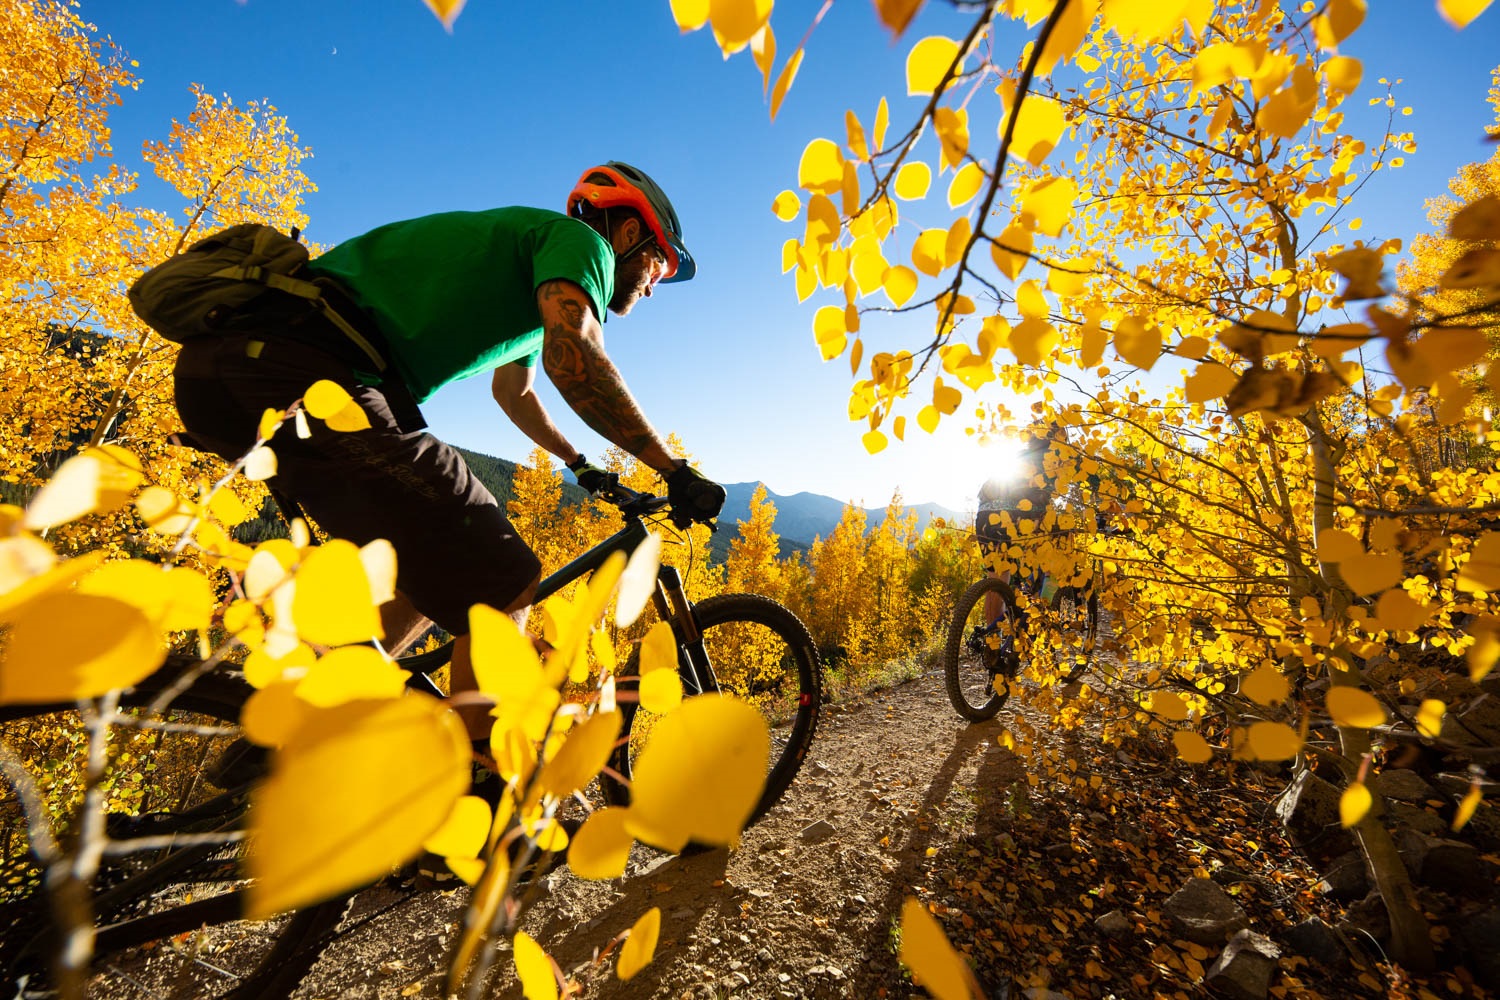 Mountain biker in Breckenridge among yellow leaves in the fall